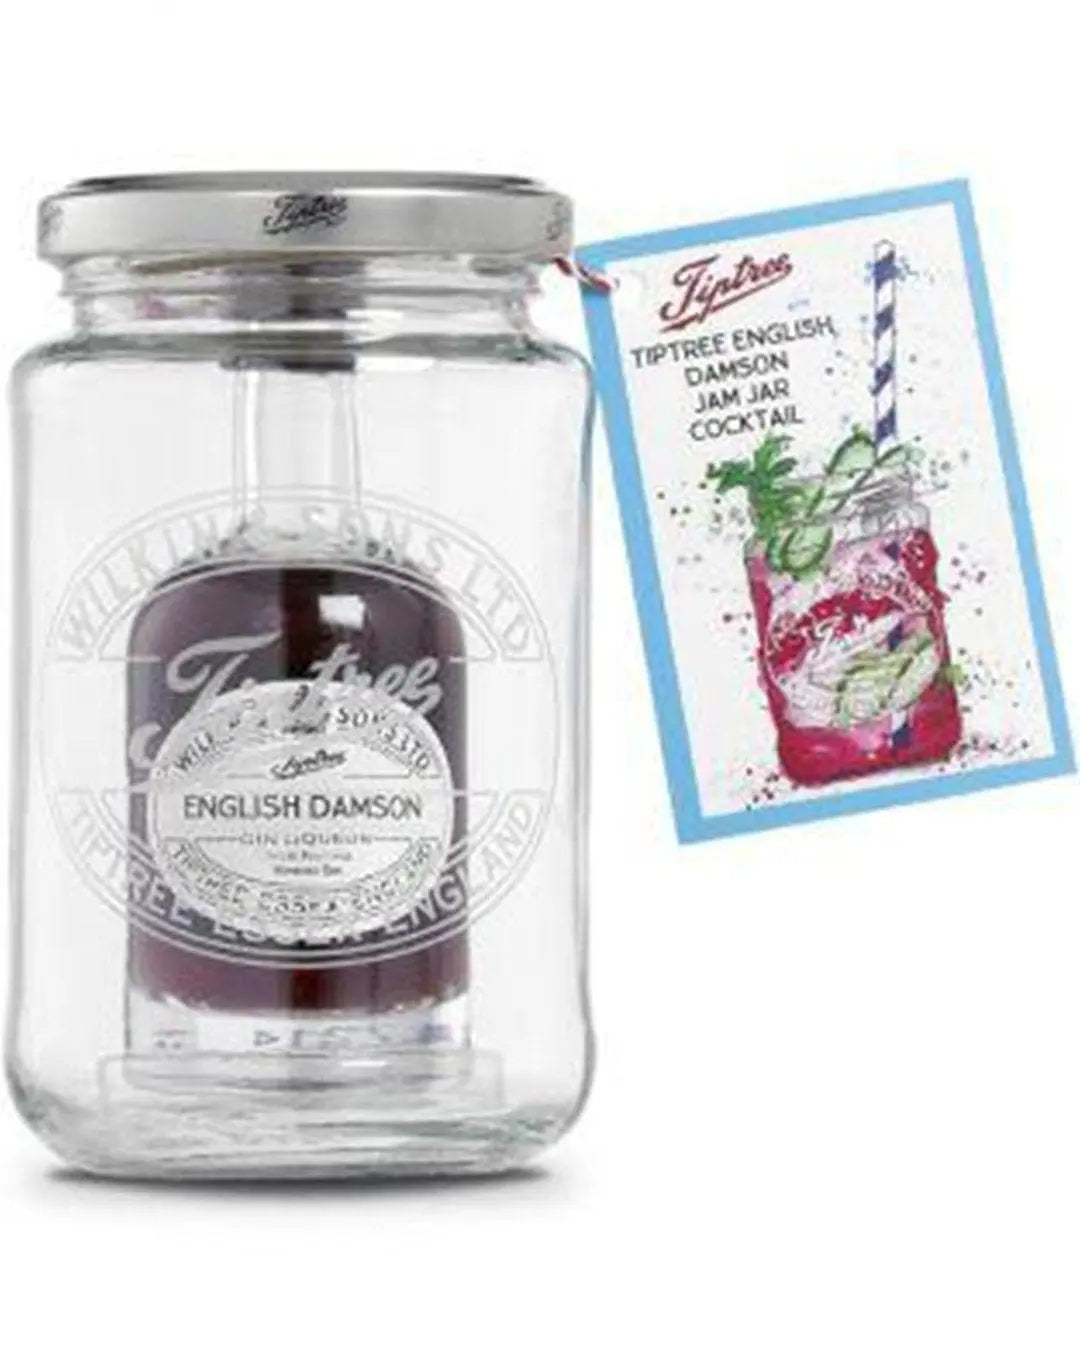 Tiptree English Damson Jam Jar Cocktail, 5 cl Spirit Miniatures 043647048028